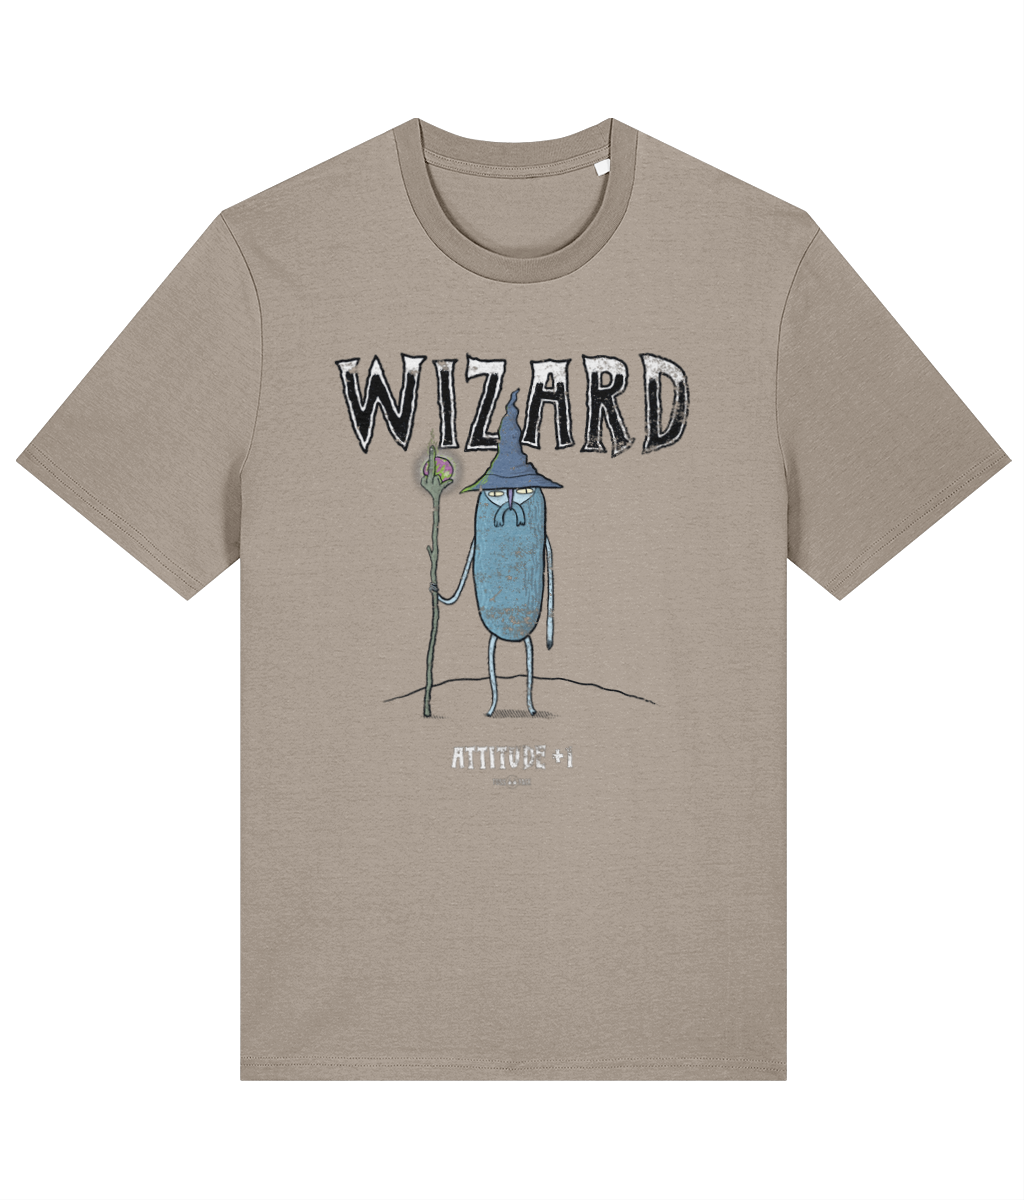 Wizard Attitude +1 - Tussface T-shirt